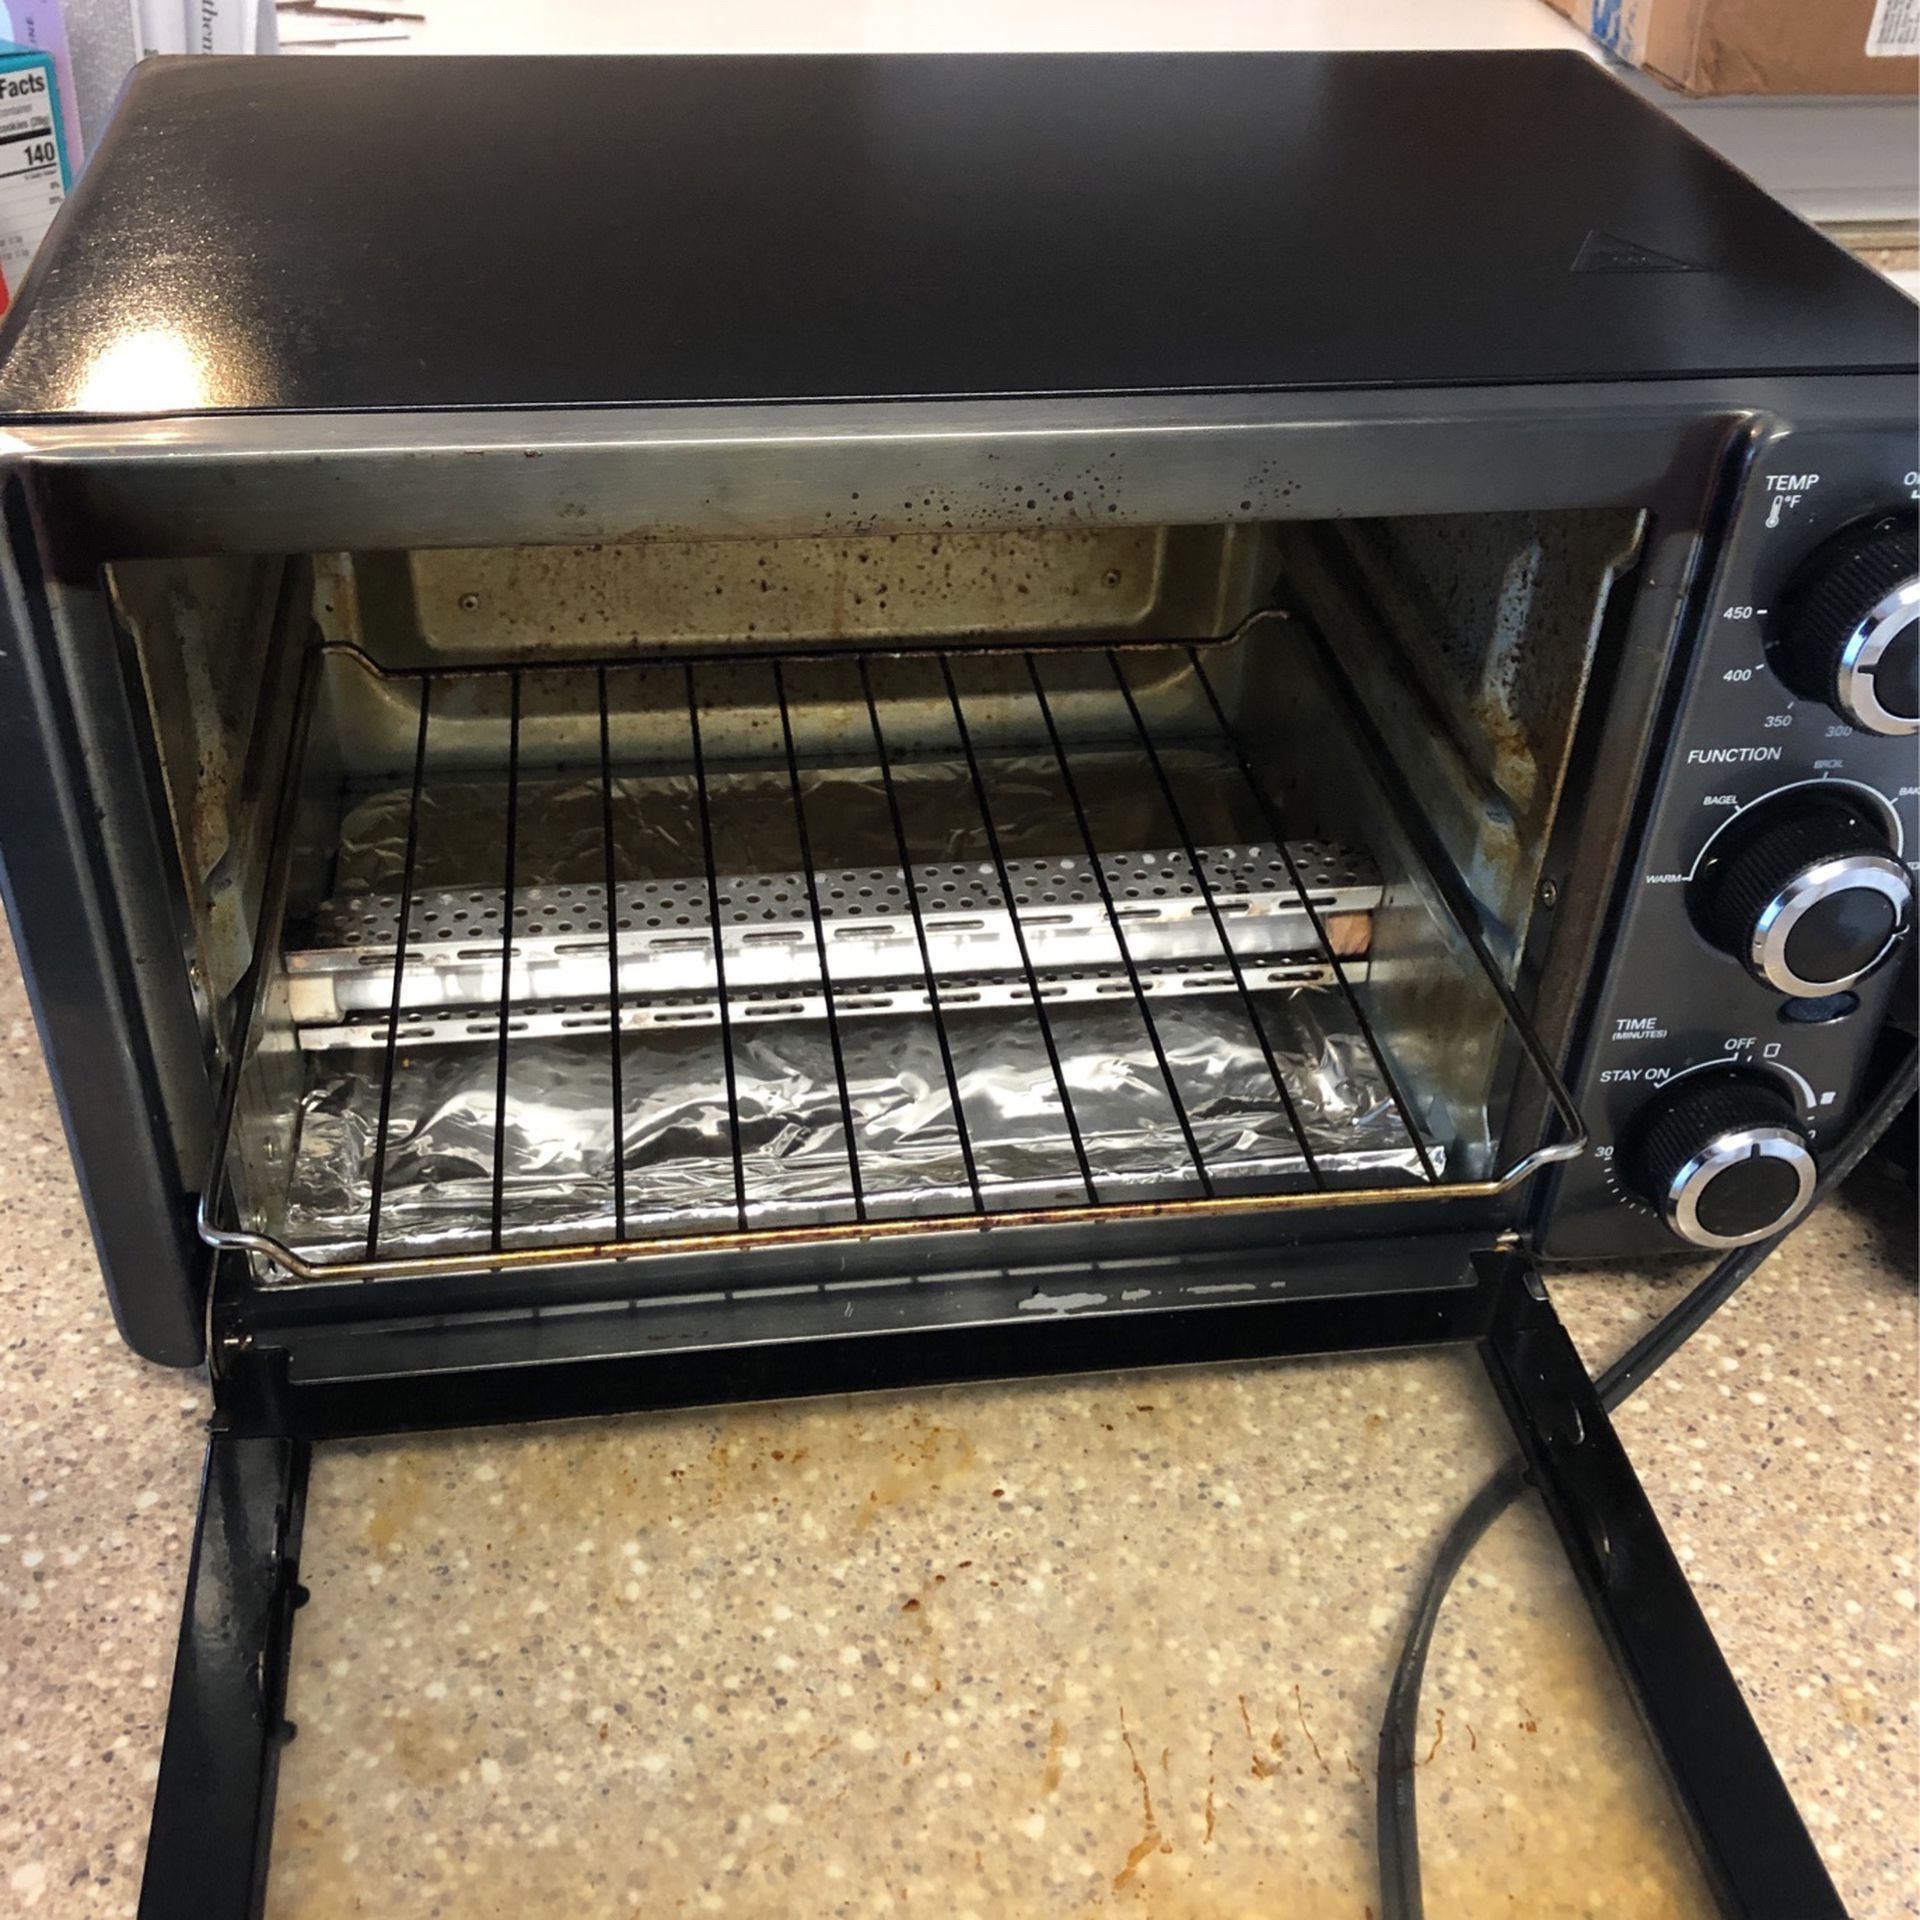 Toaster Oven, Griddle & Random Kitchen Stuff